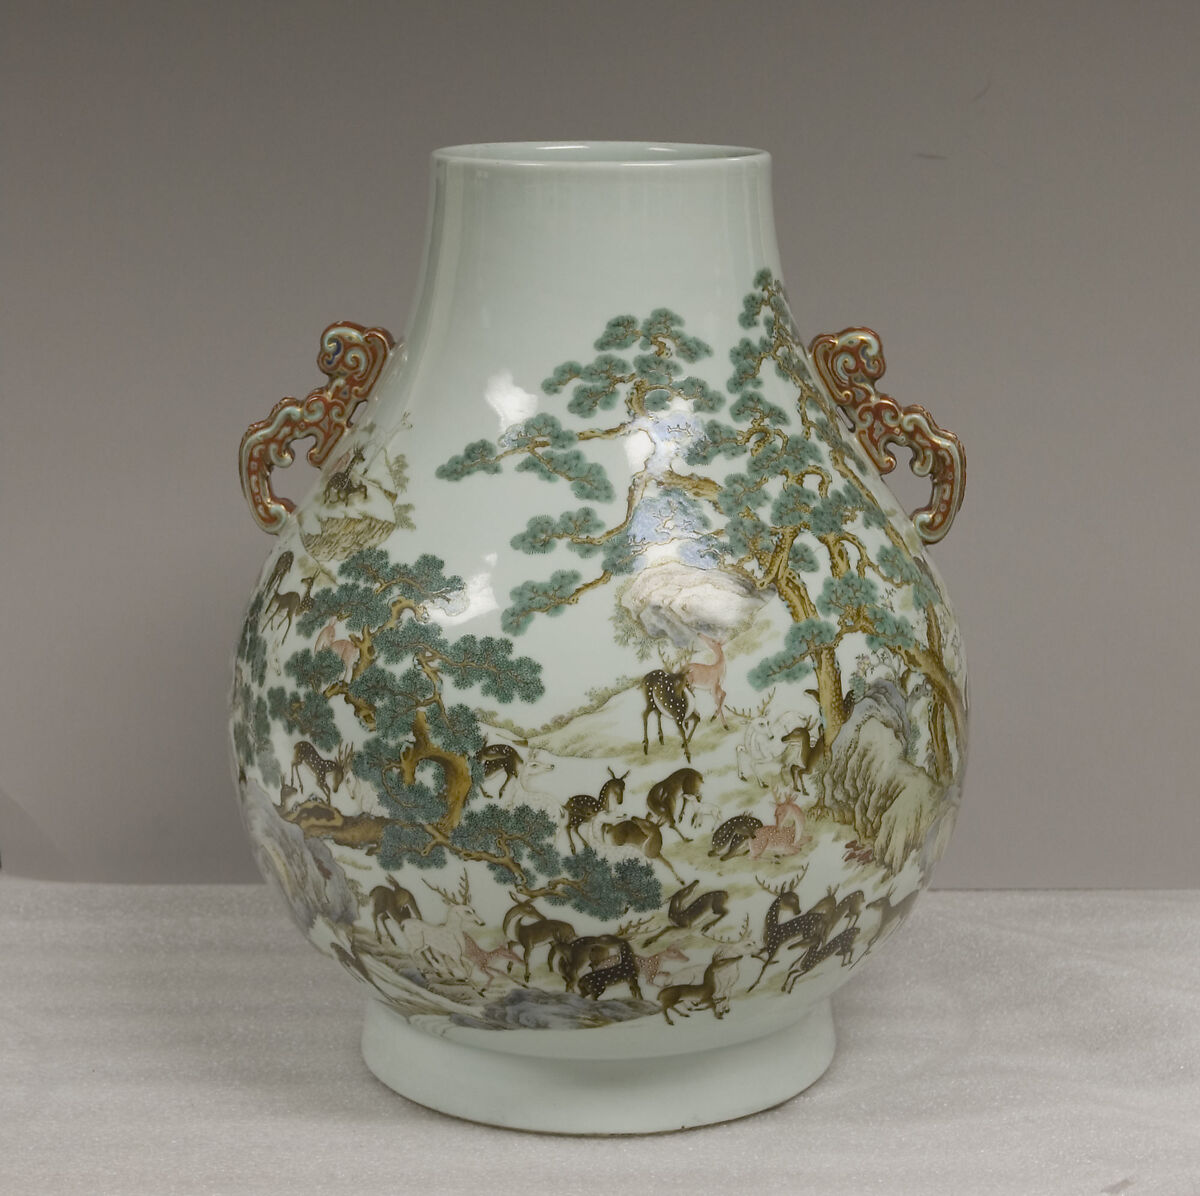 Vase with "One Hundred Deer" Motif, Porcelain painted in overglaze enamels (Jingdezhen ware), China 